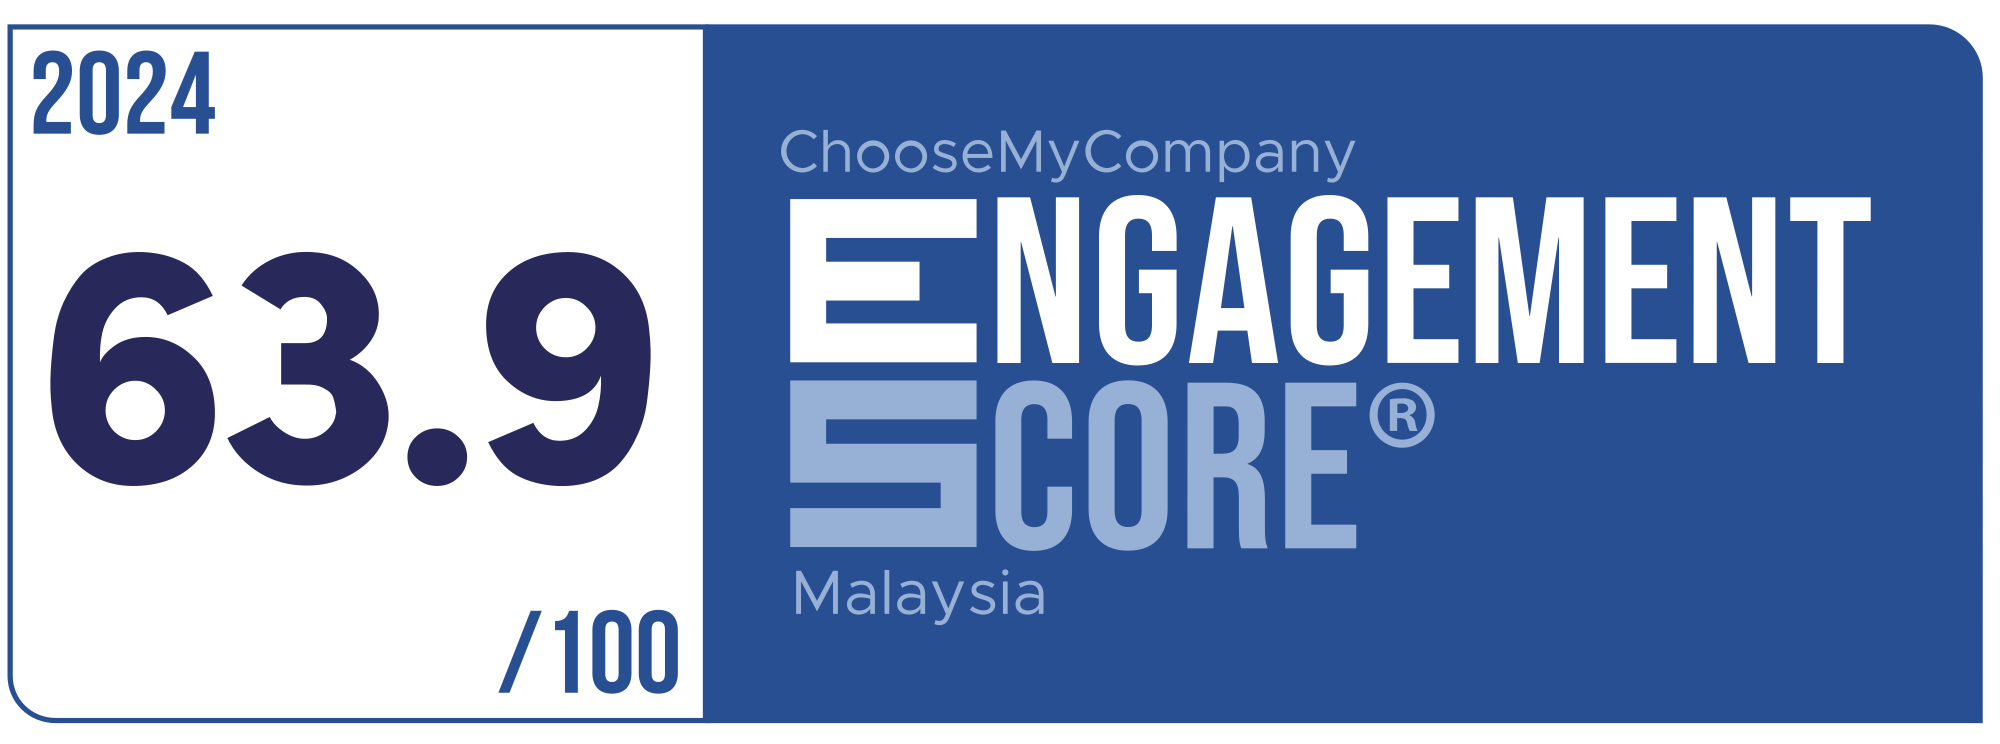 Label Engagement Score 2024 Malaysia